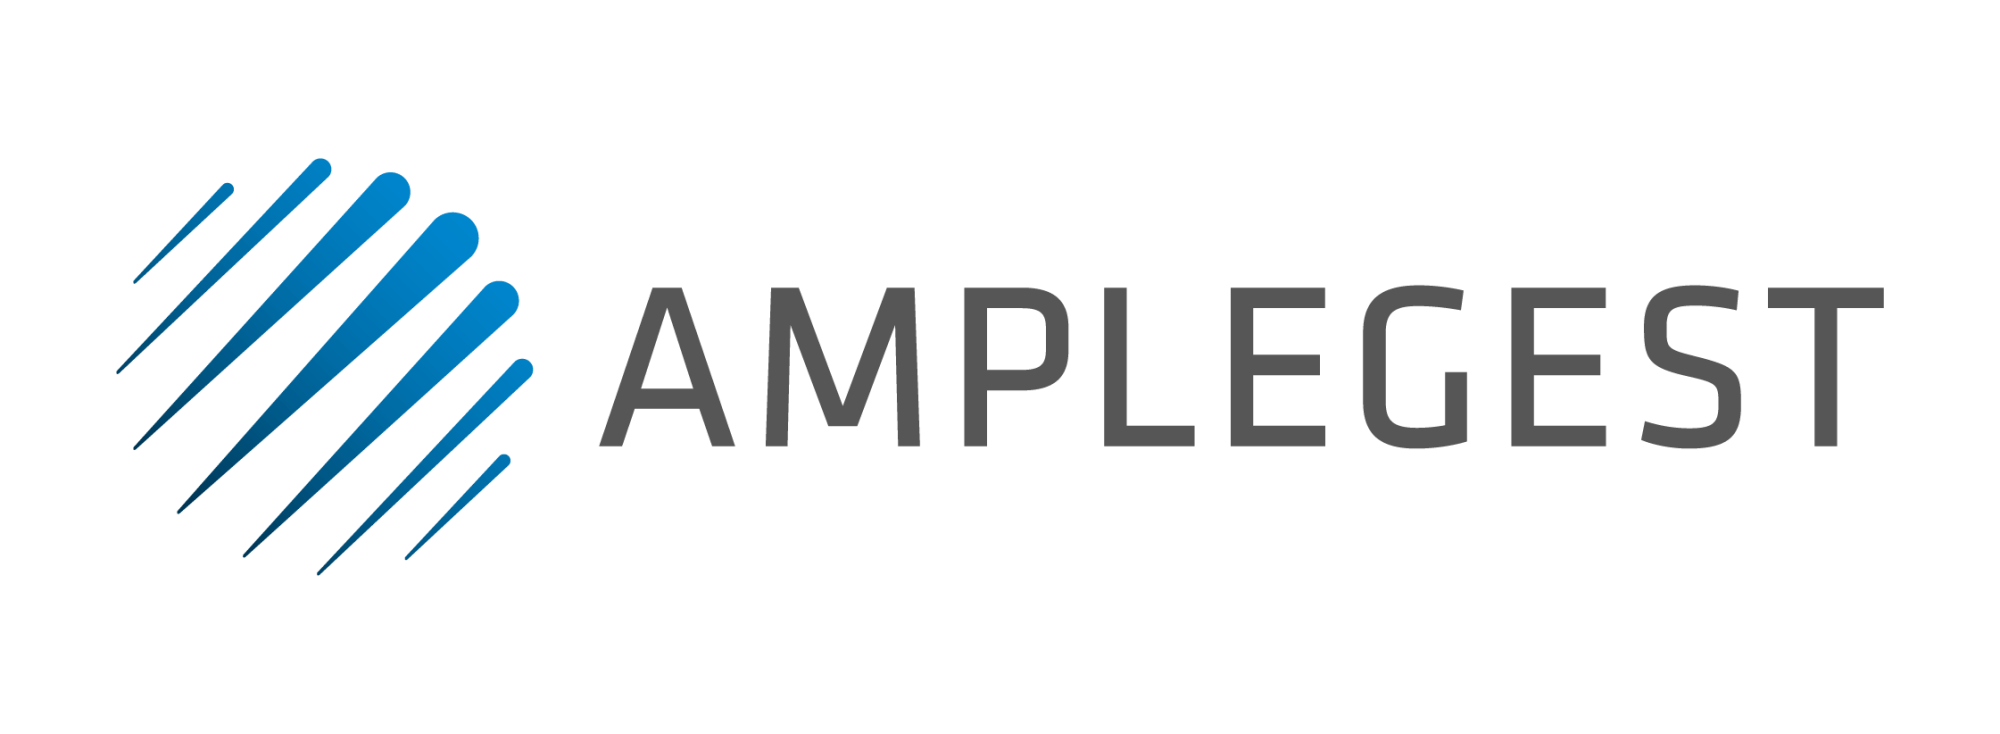 Image du logo Amplegest